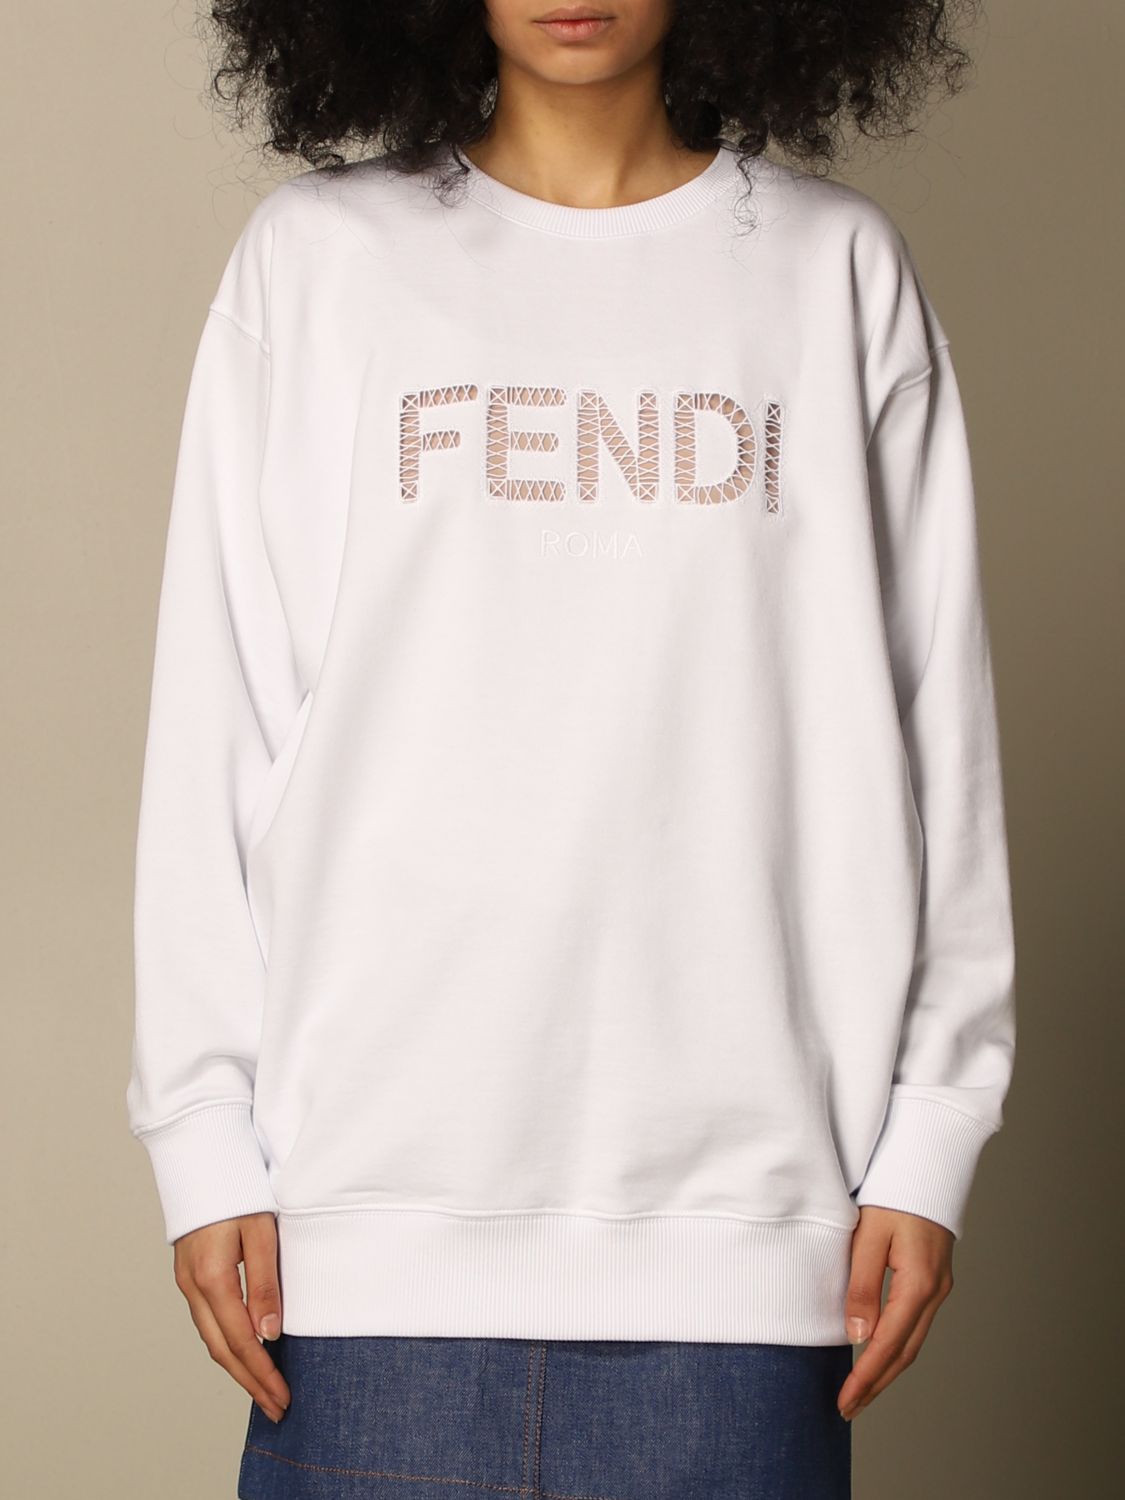 Buy > fendi white sweatshirt > in stock